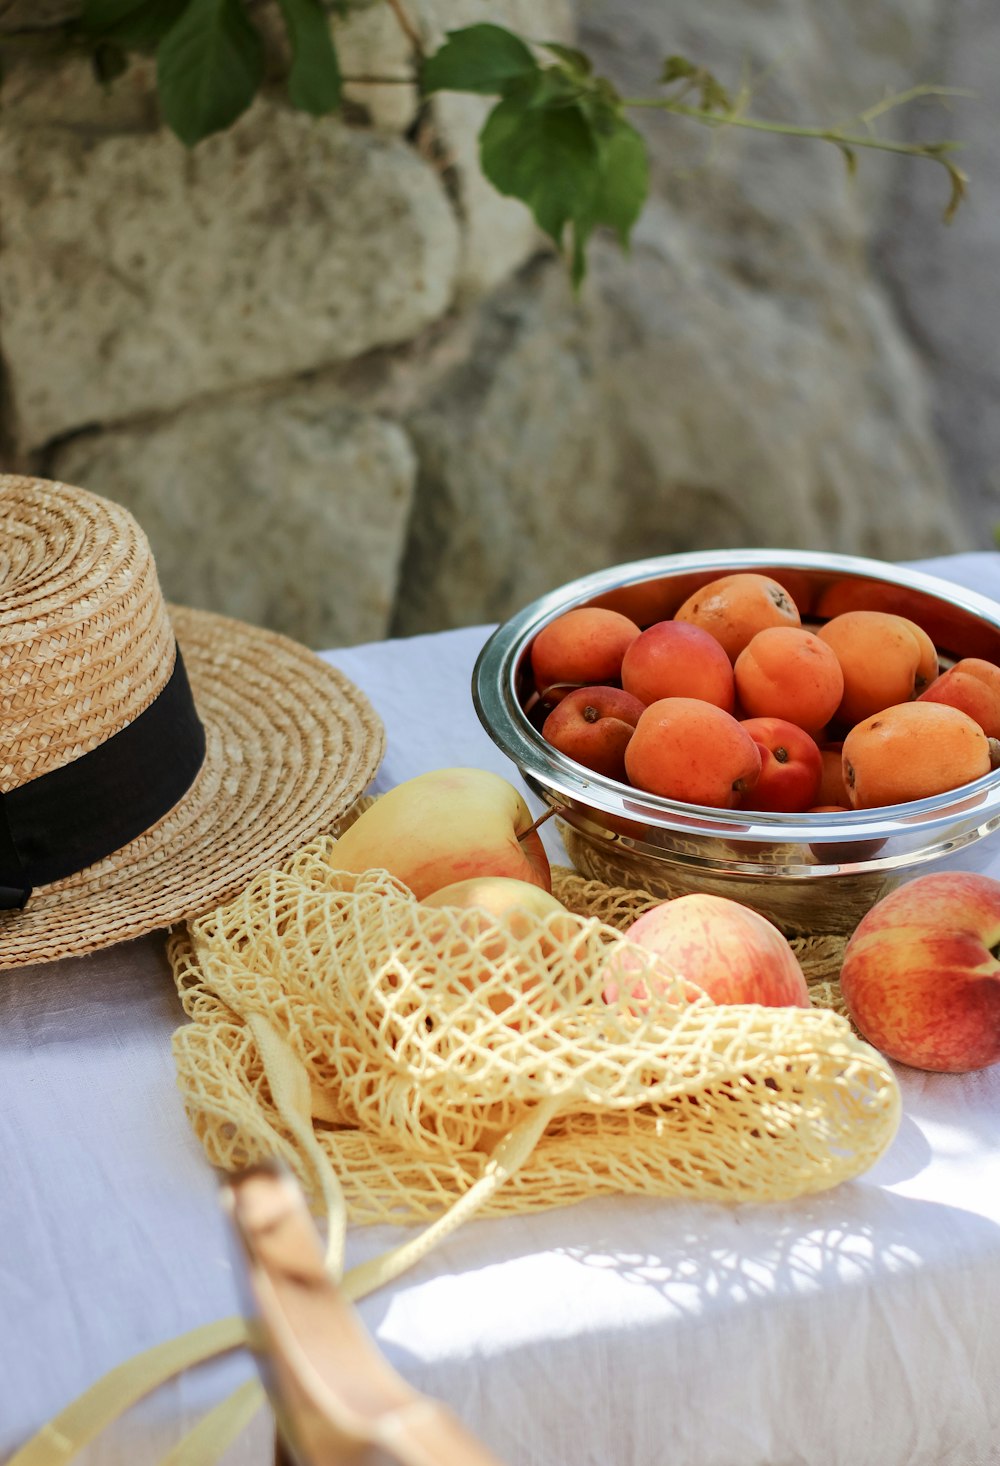 orange fruits on brown woven basket